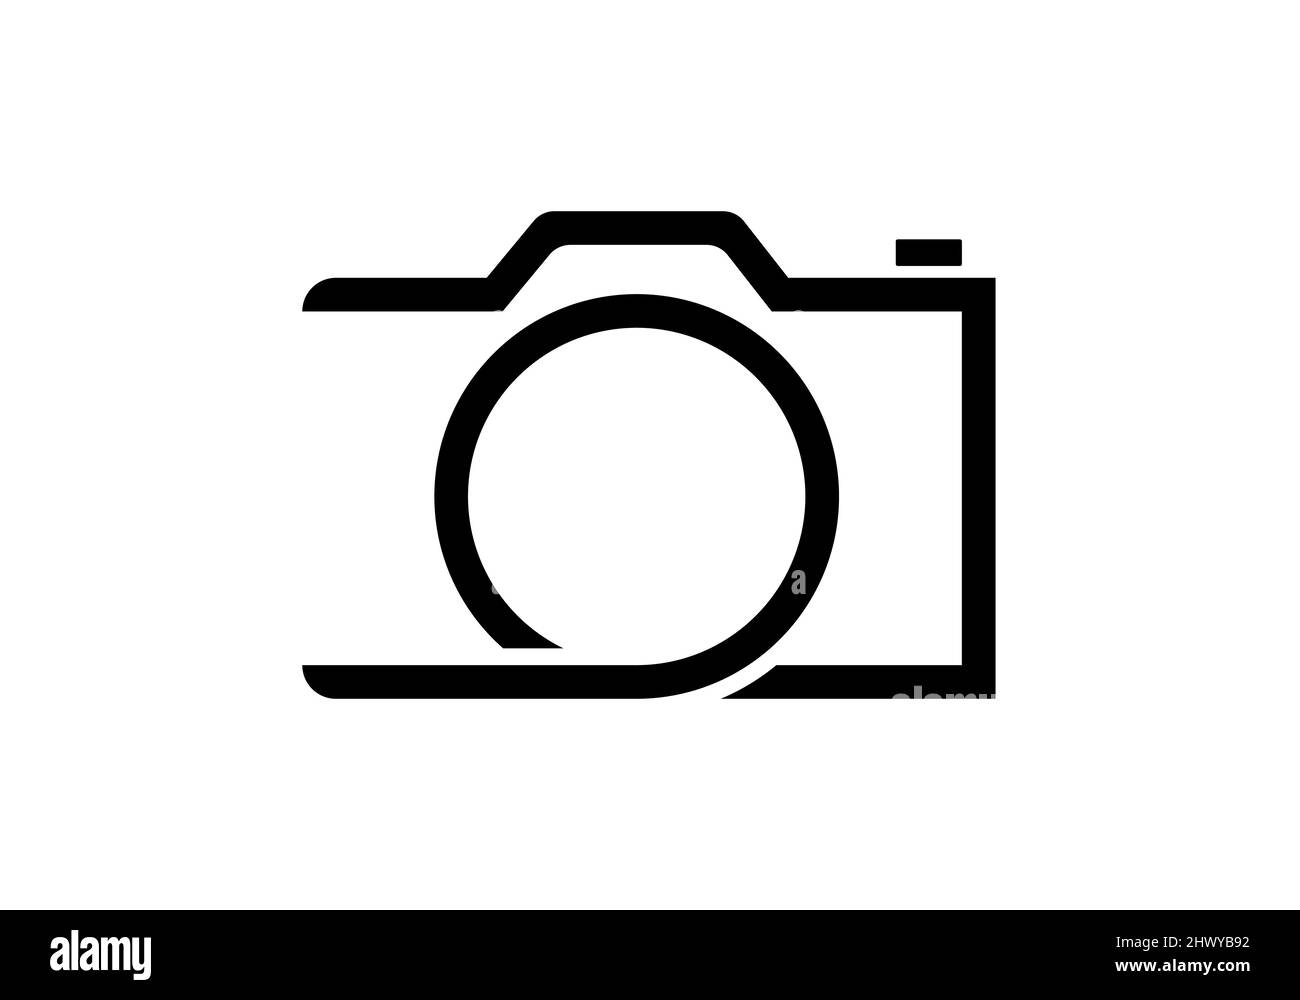 Camera logo Black and White Stock Photos & Images - Alamy